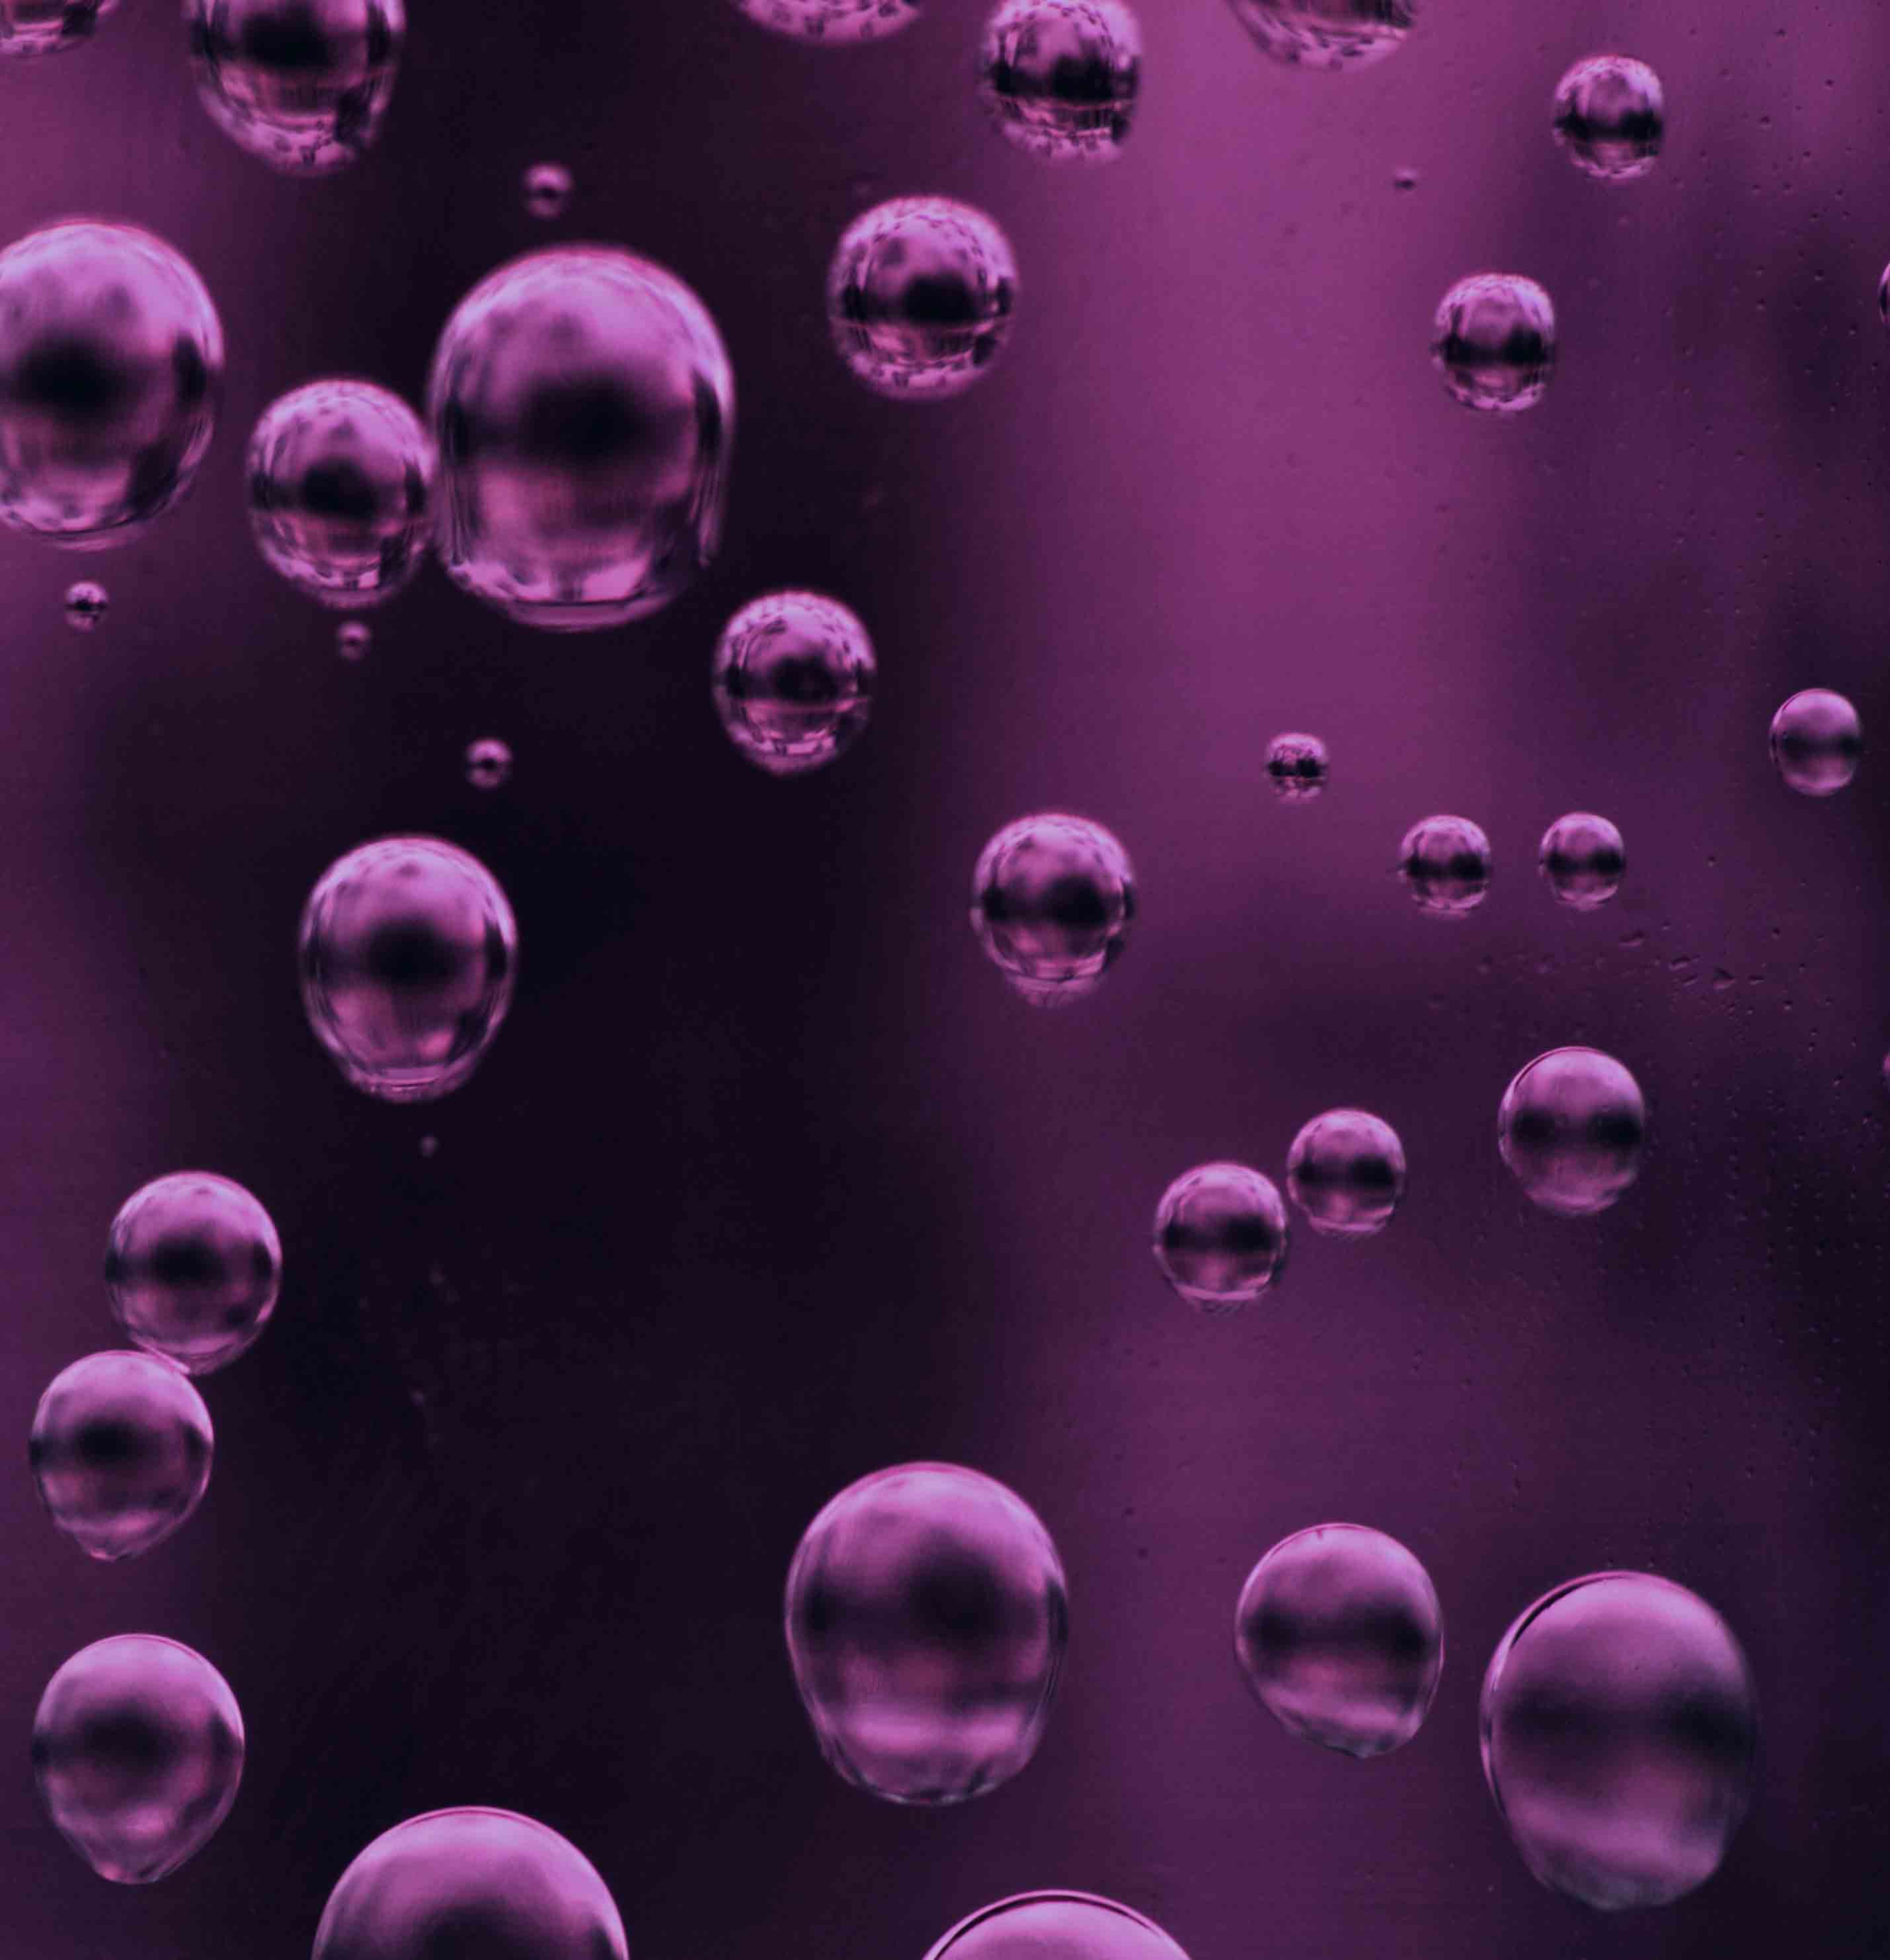 Bubble is a purple liquid